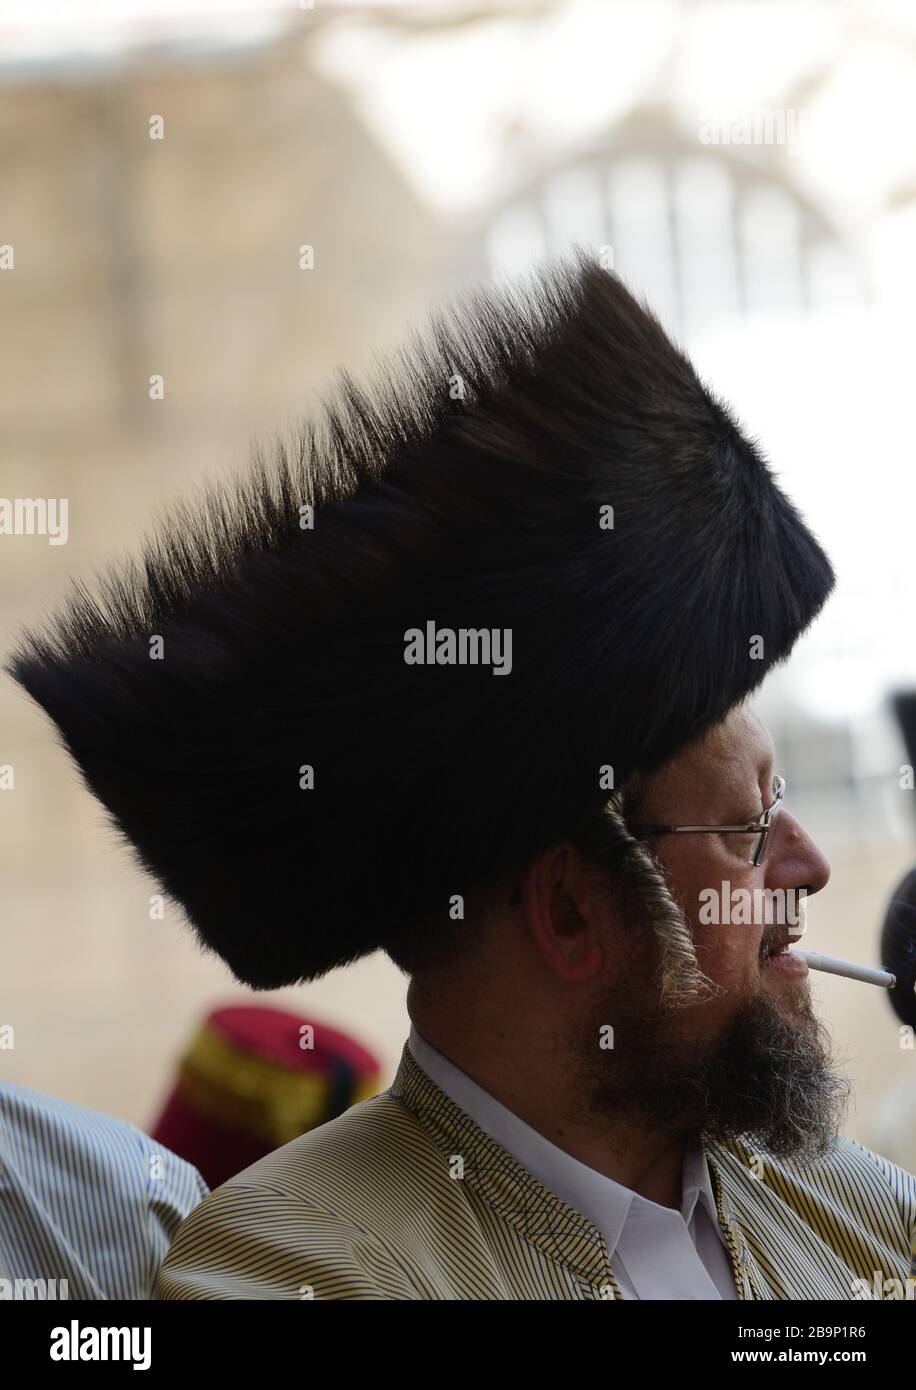 A Jewish Hasidic man wearing a Shtreimel ( traditional fur hat ) smoking a cigarette. Stock Photo